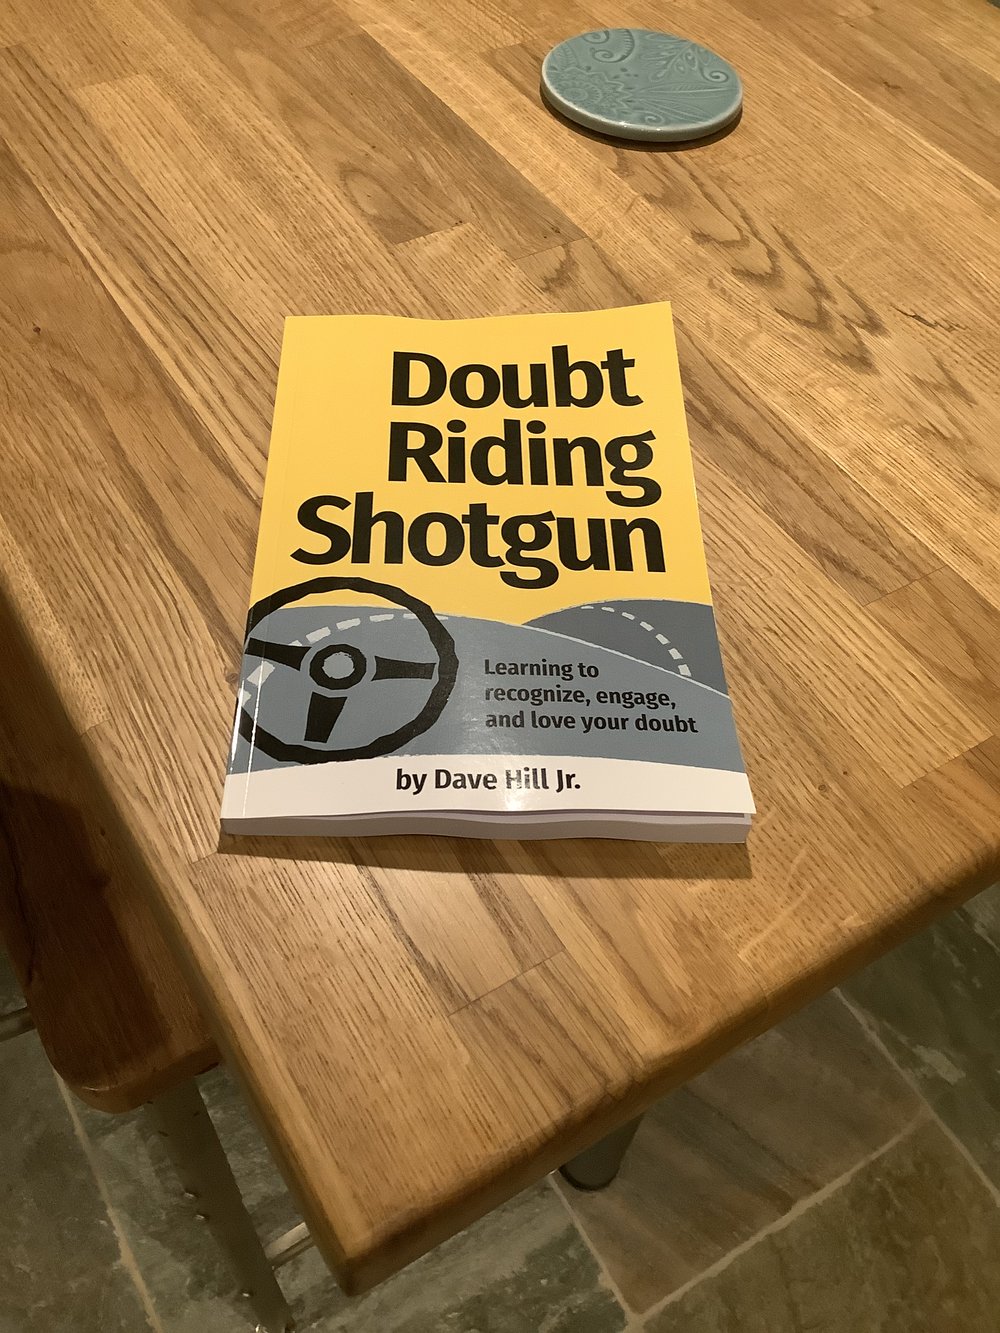 Doubt_Riding_Shotgun_on_table.JPG